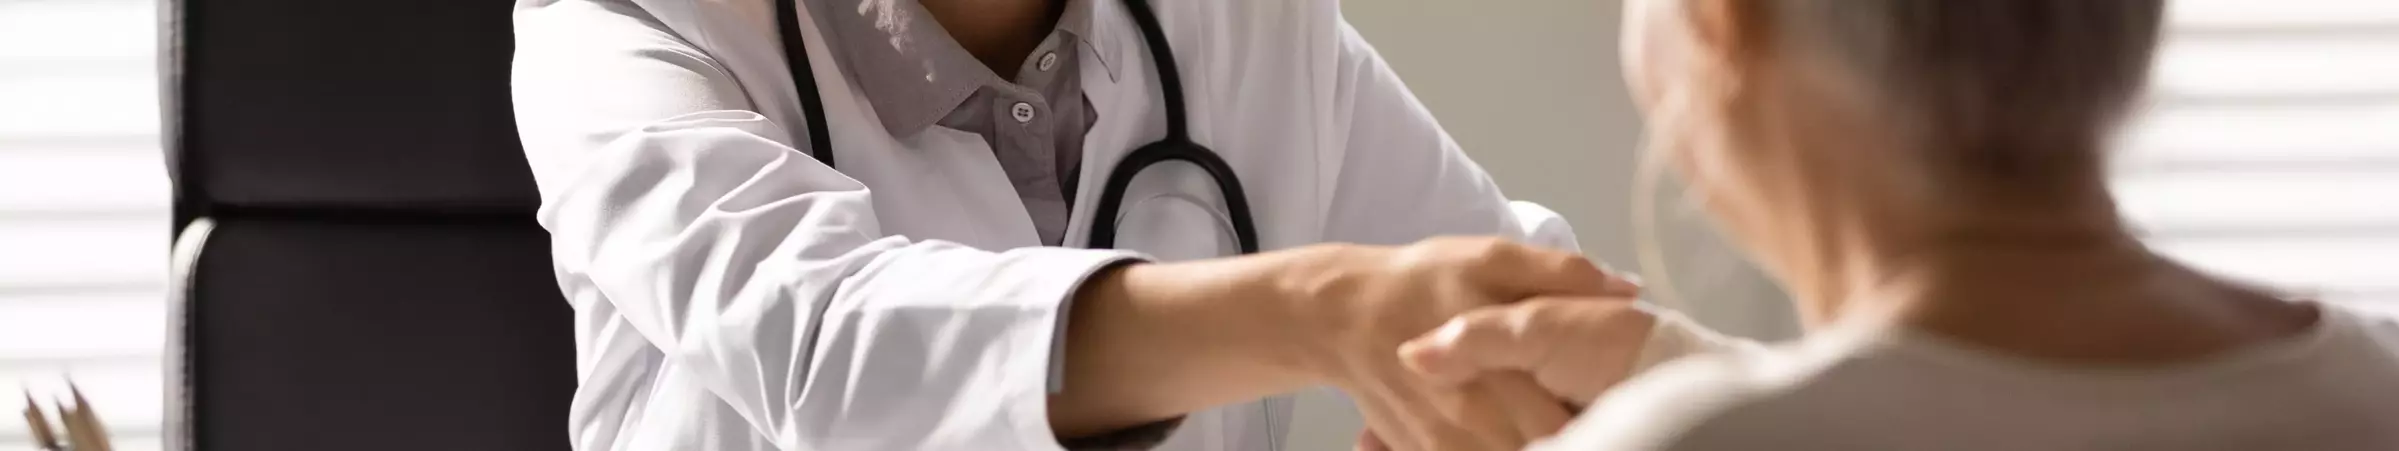 elderly woman shaking doctor's hand